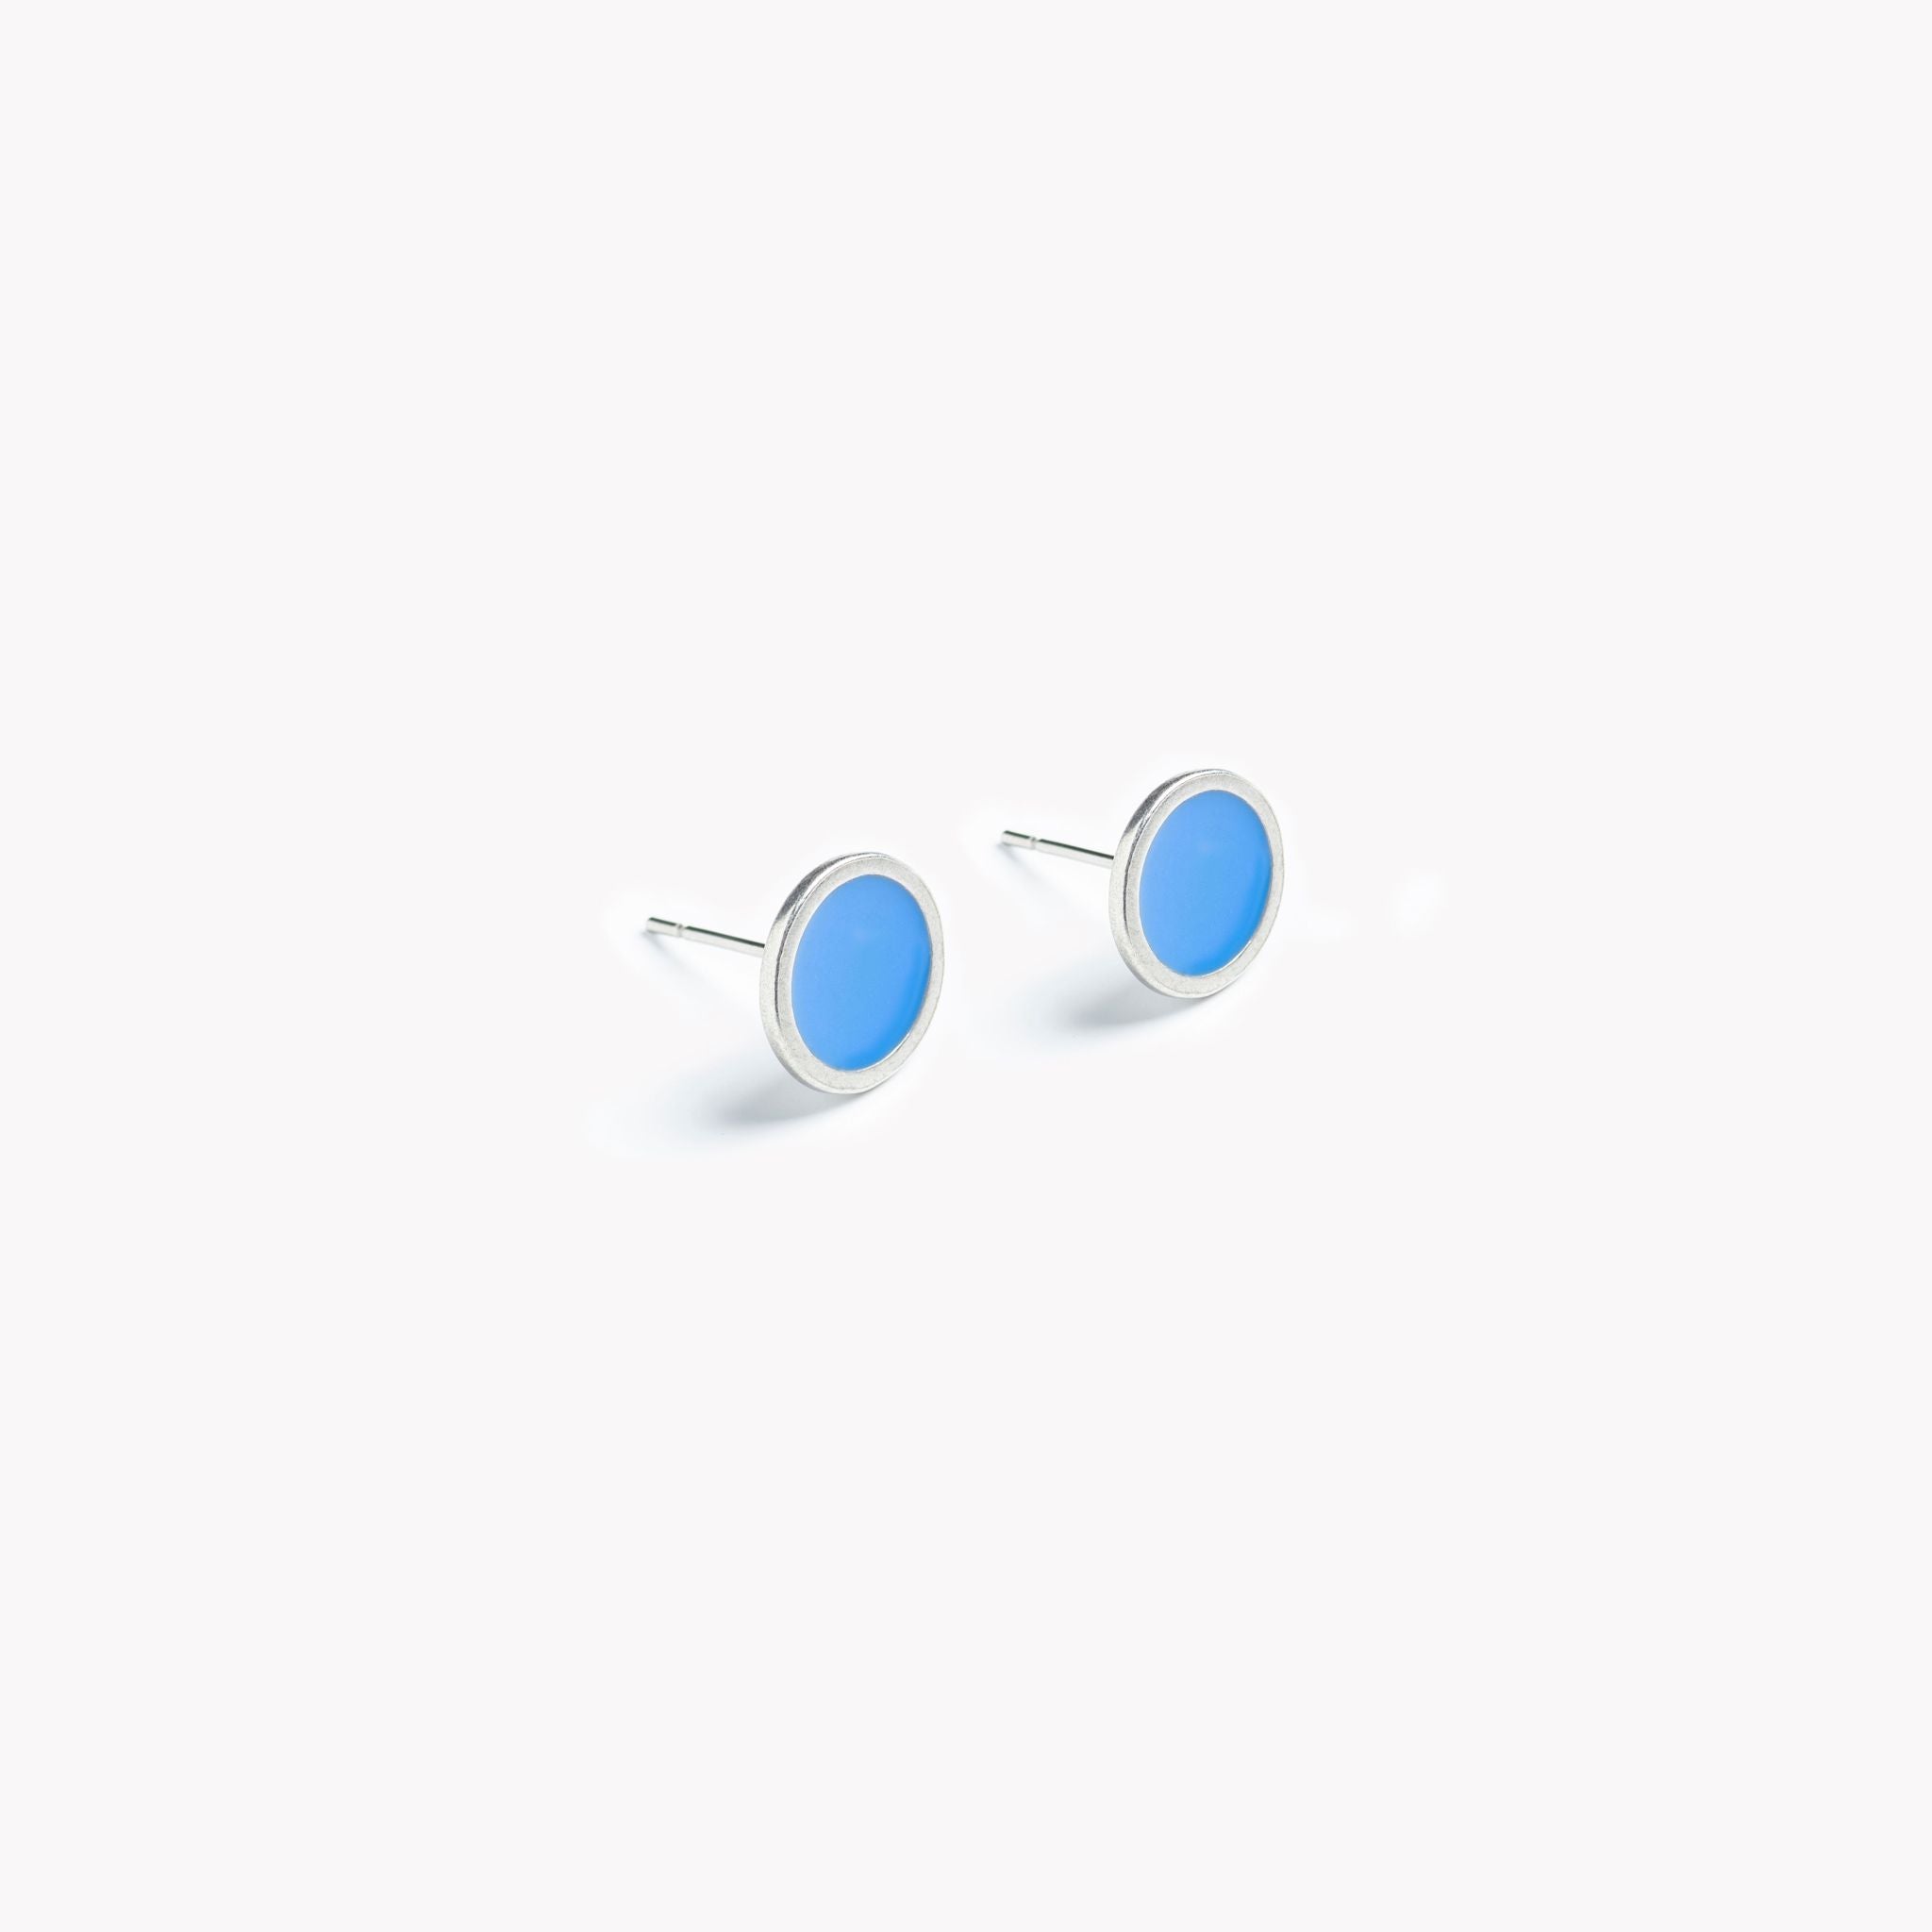 A simple pair of bright blue circular stud earrings.